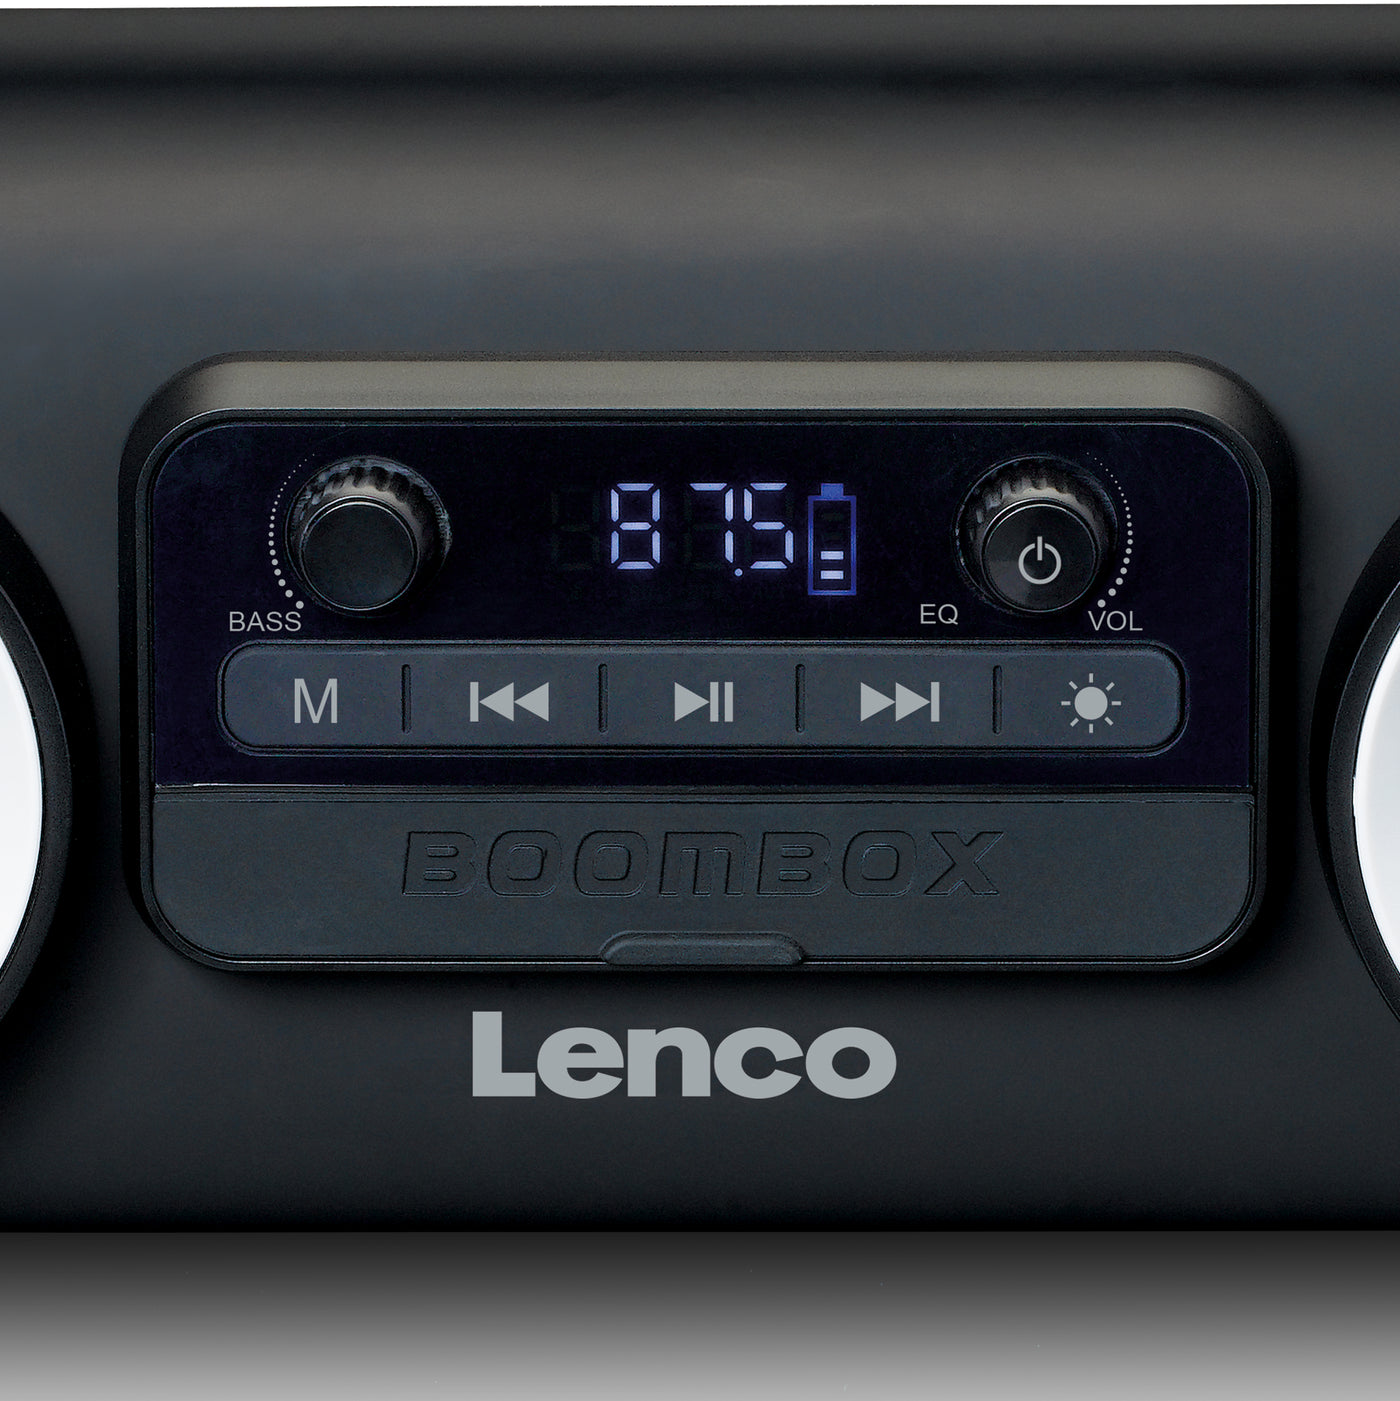 LENCO - SPR-100BK - Splash proof Bluetooth® Speaker FM radio USB and SD with Light Effects - Black